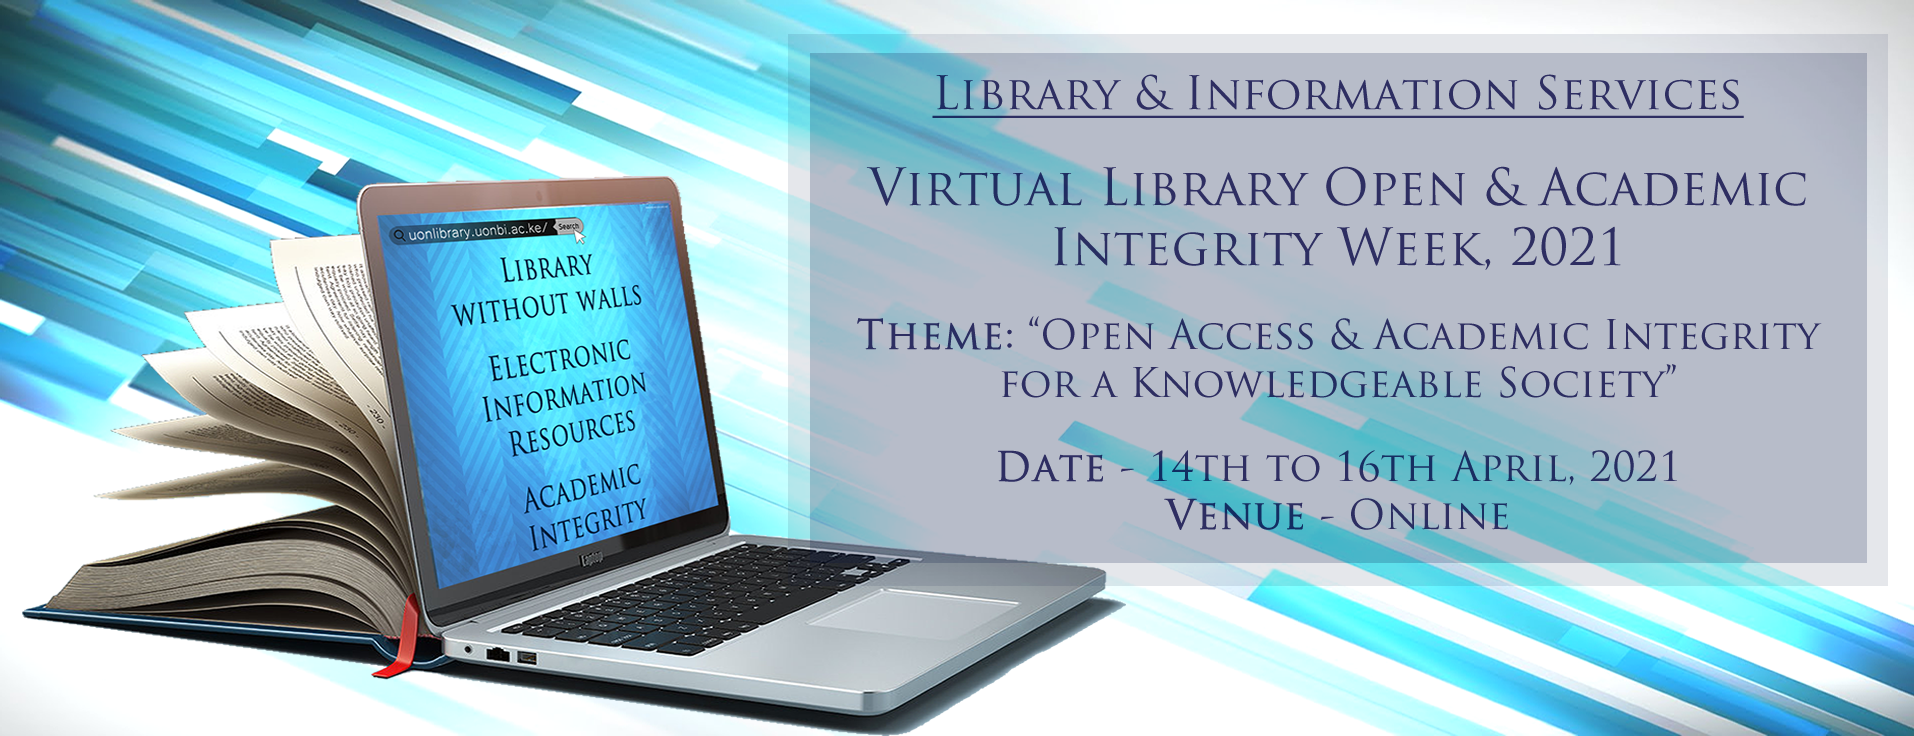 Virtual Library Open / Academic Integrity Week, 2021